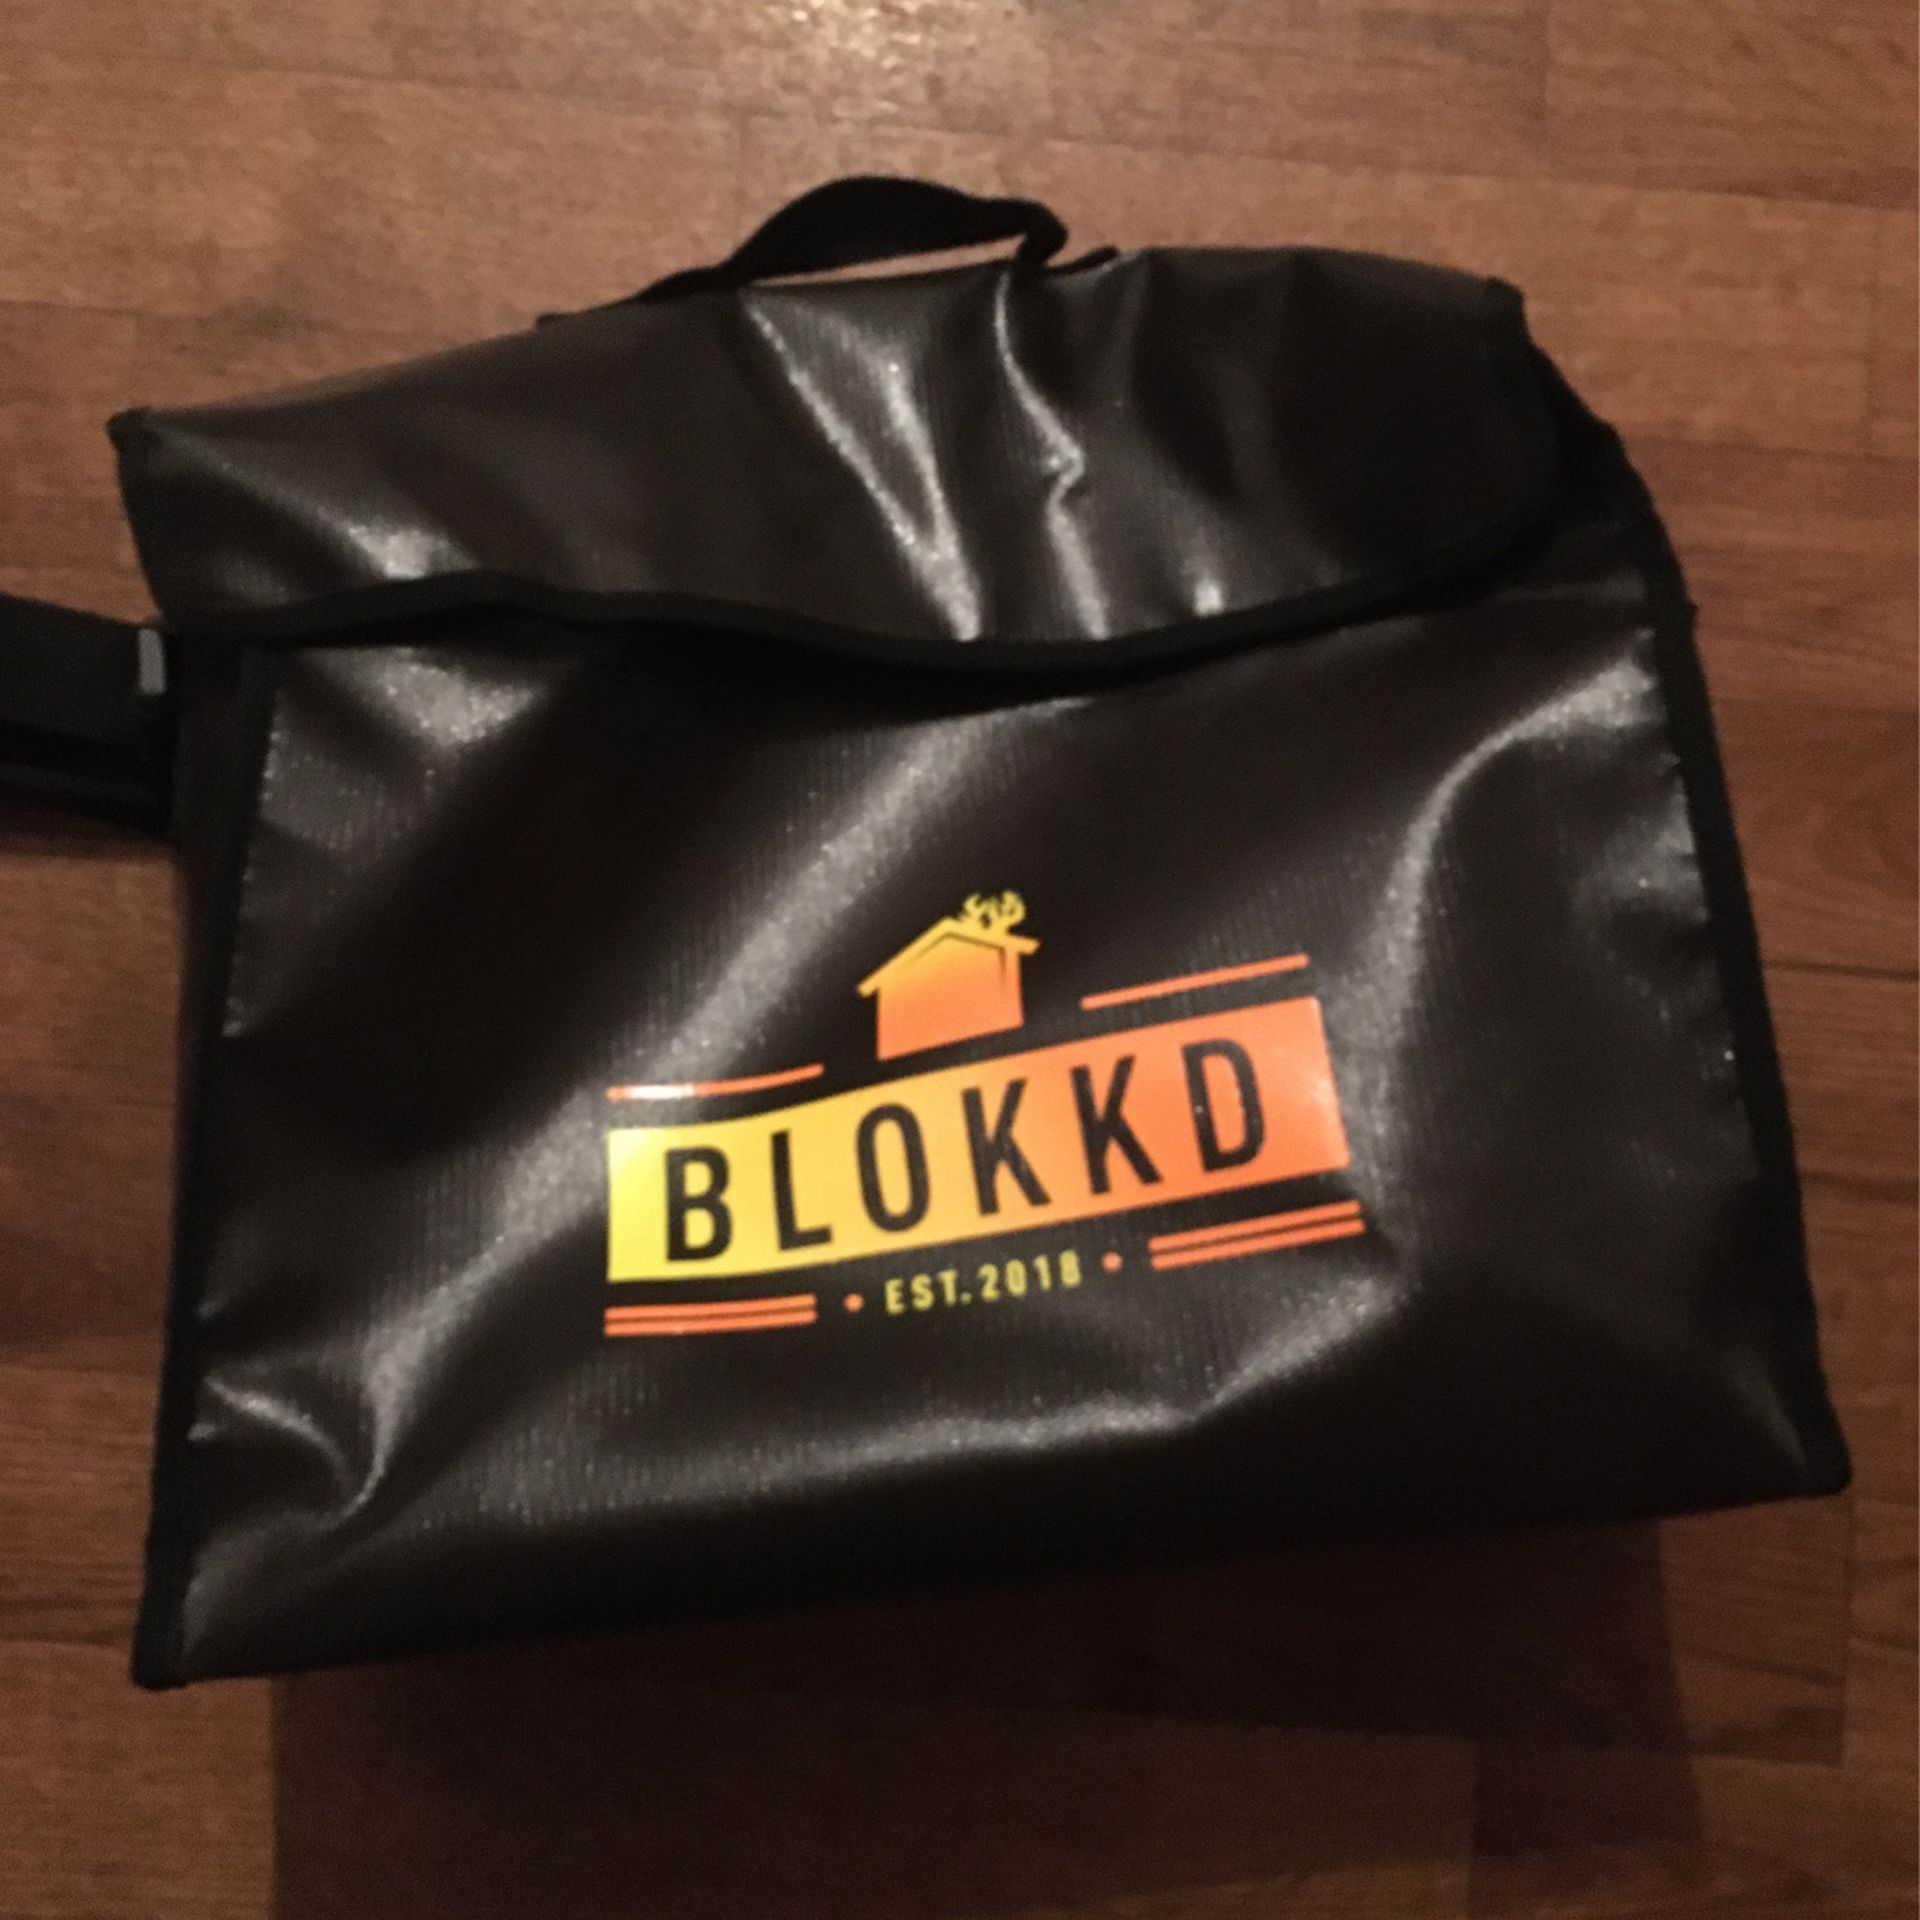 Blokkd Fire Proof Bag